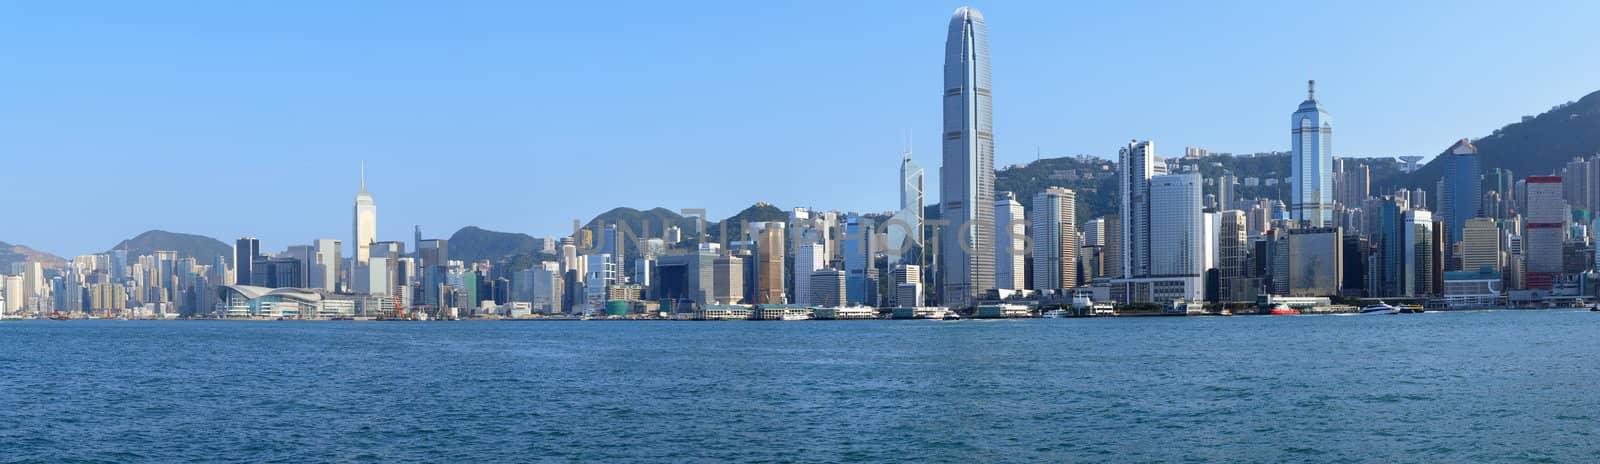 Hong Kong panorama by leungchopan